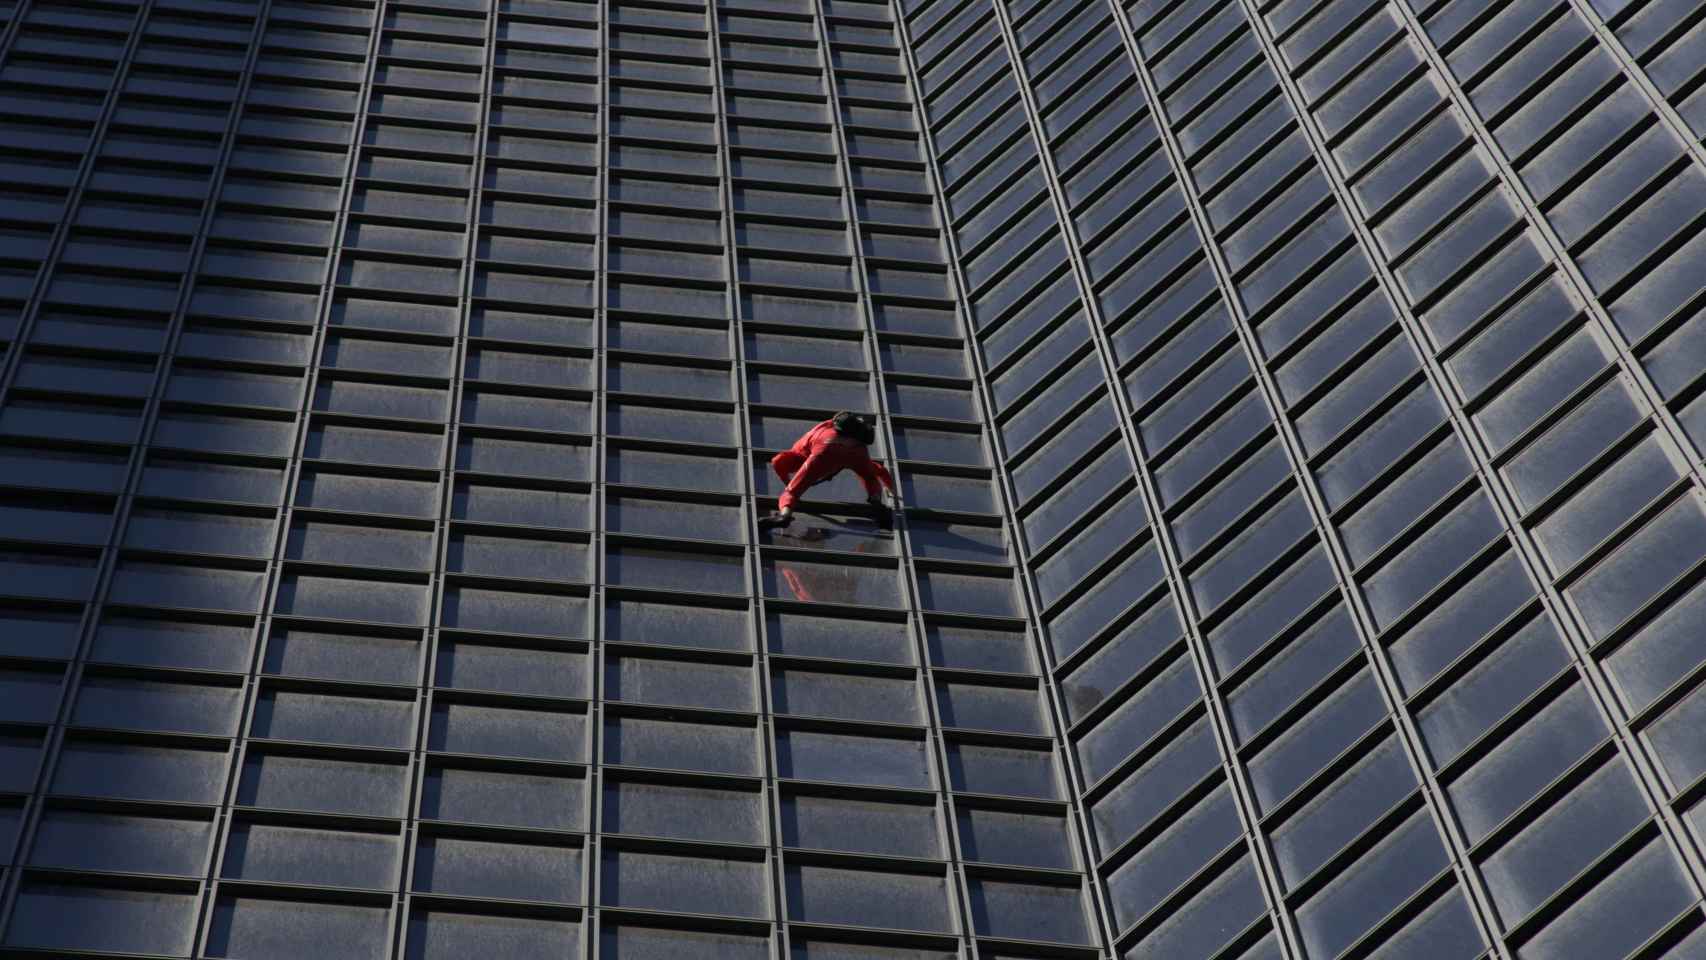 El 'spiderman francés', Alain Robert, durante la escalada del rascacielos parisino